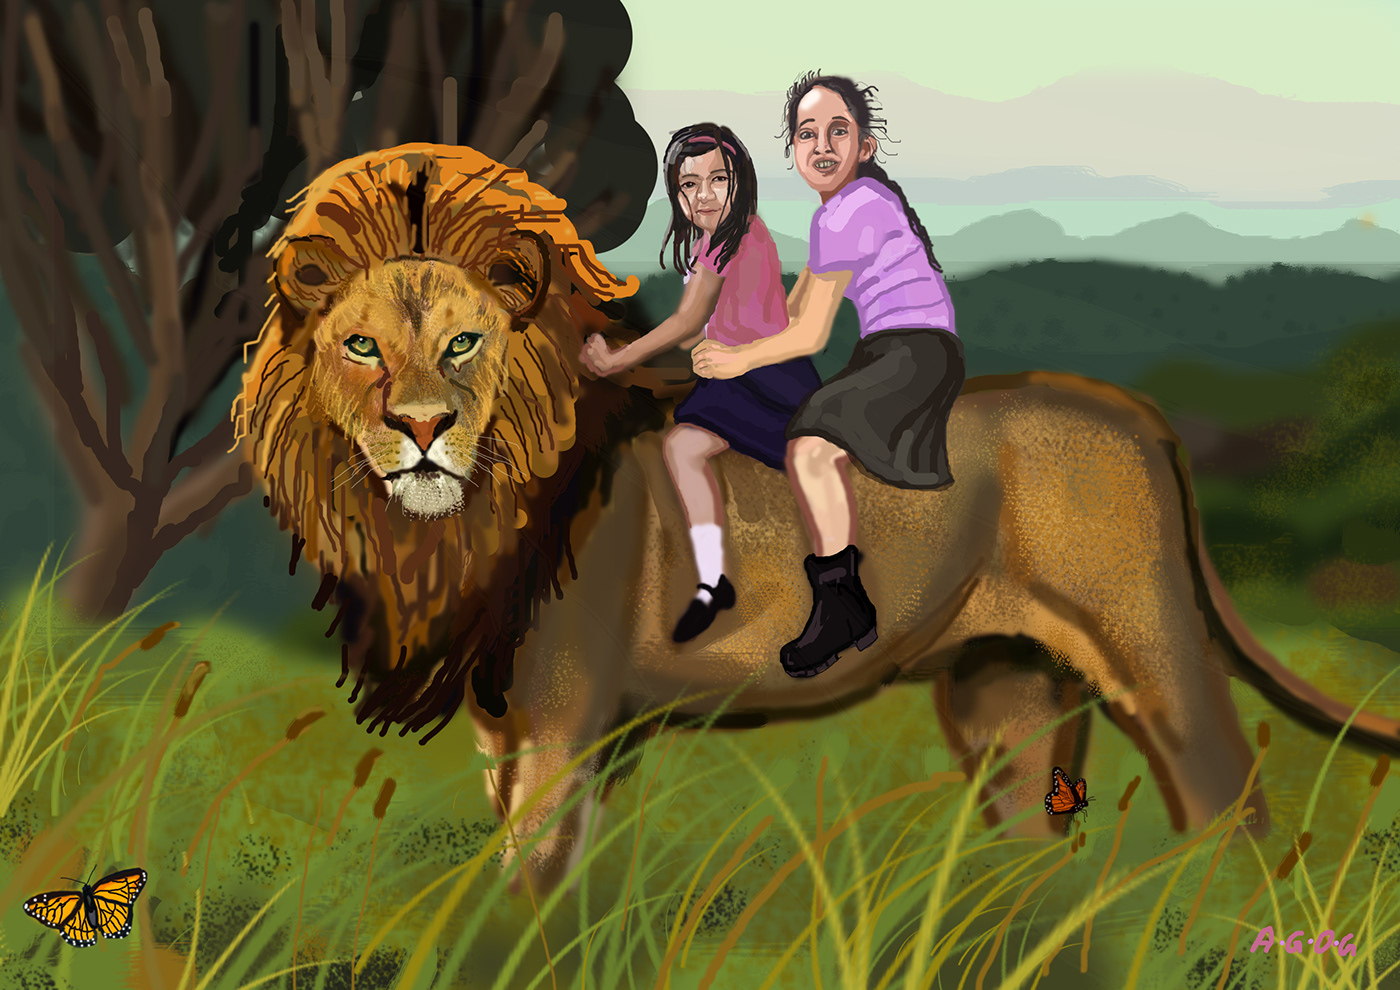 aslan children childrensbooks conceptart Digitlapainting lion lionportrait Narnia wildlifeart